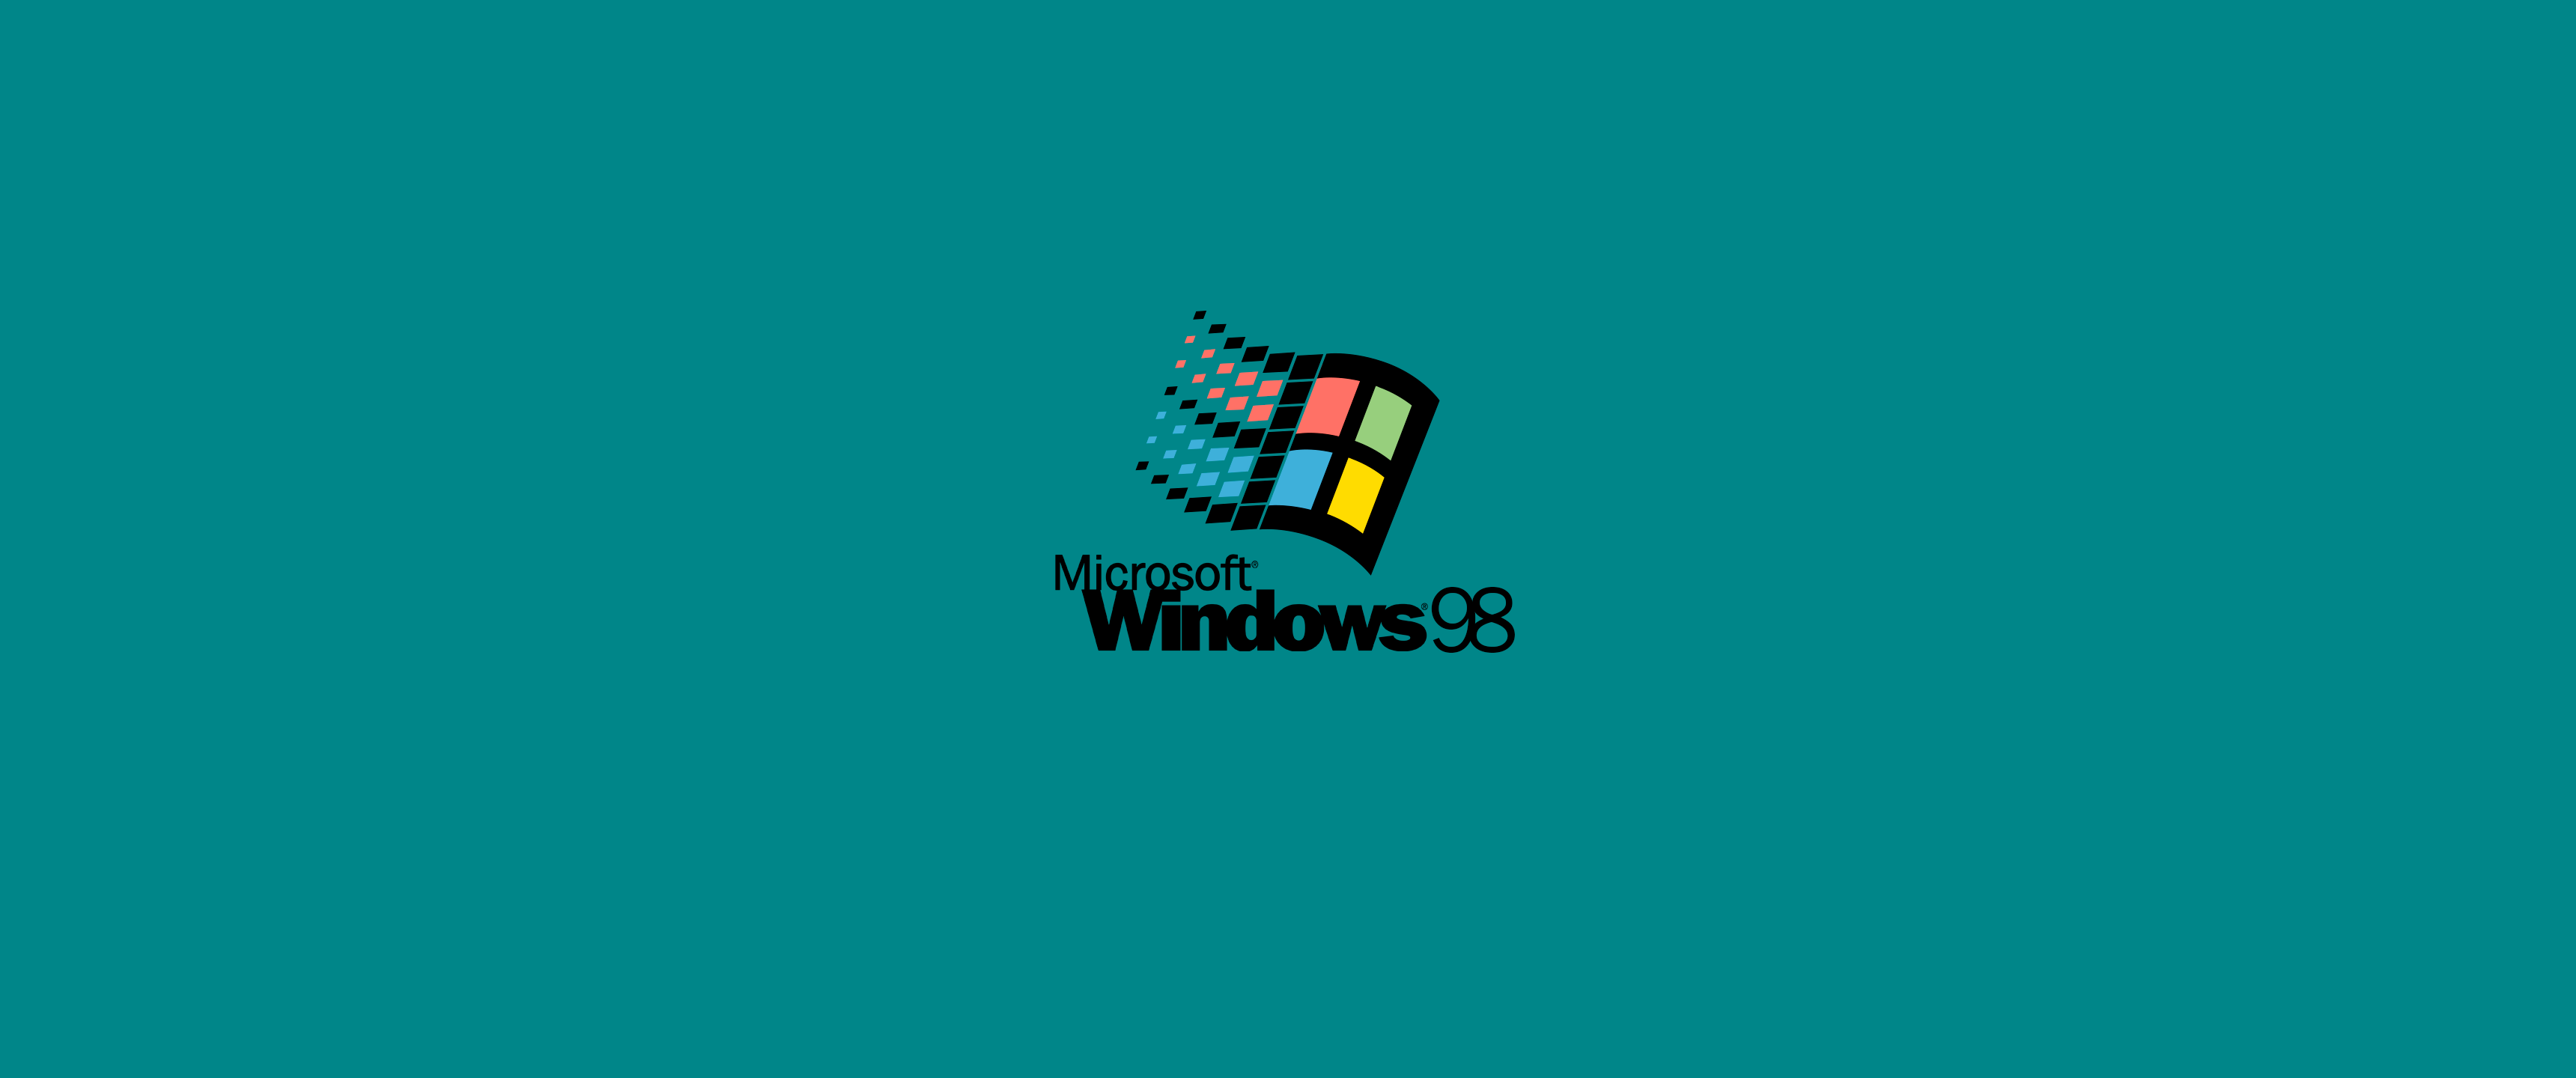 Technology Windows 98 3440x1440